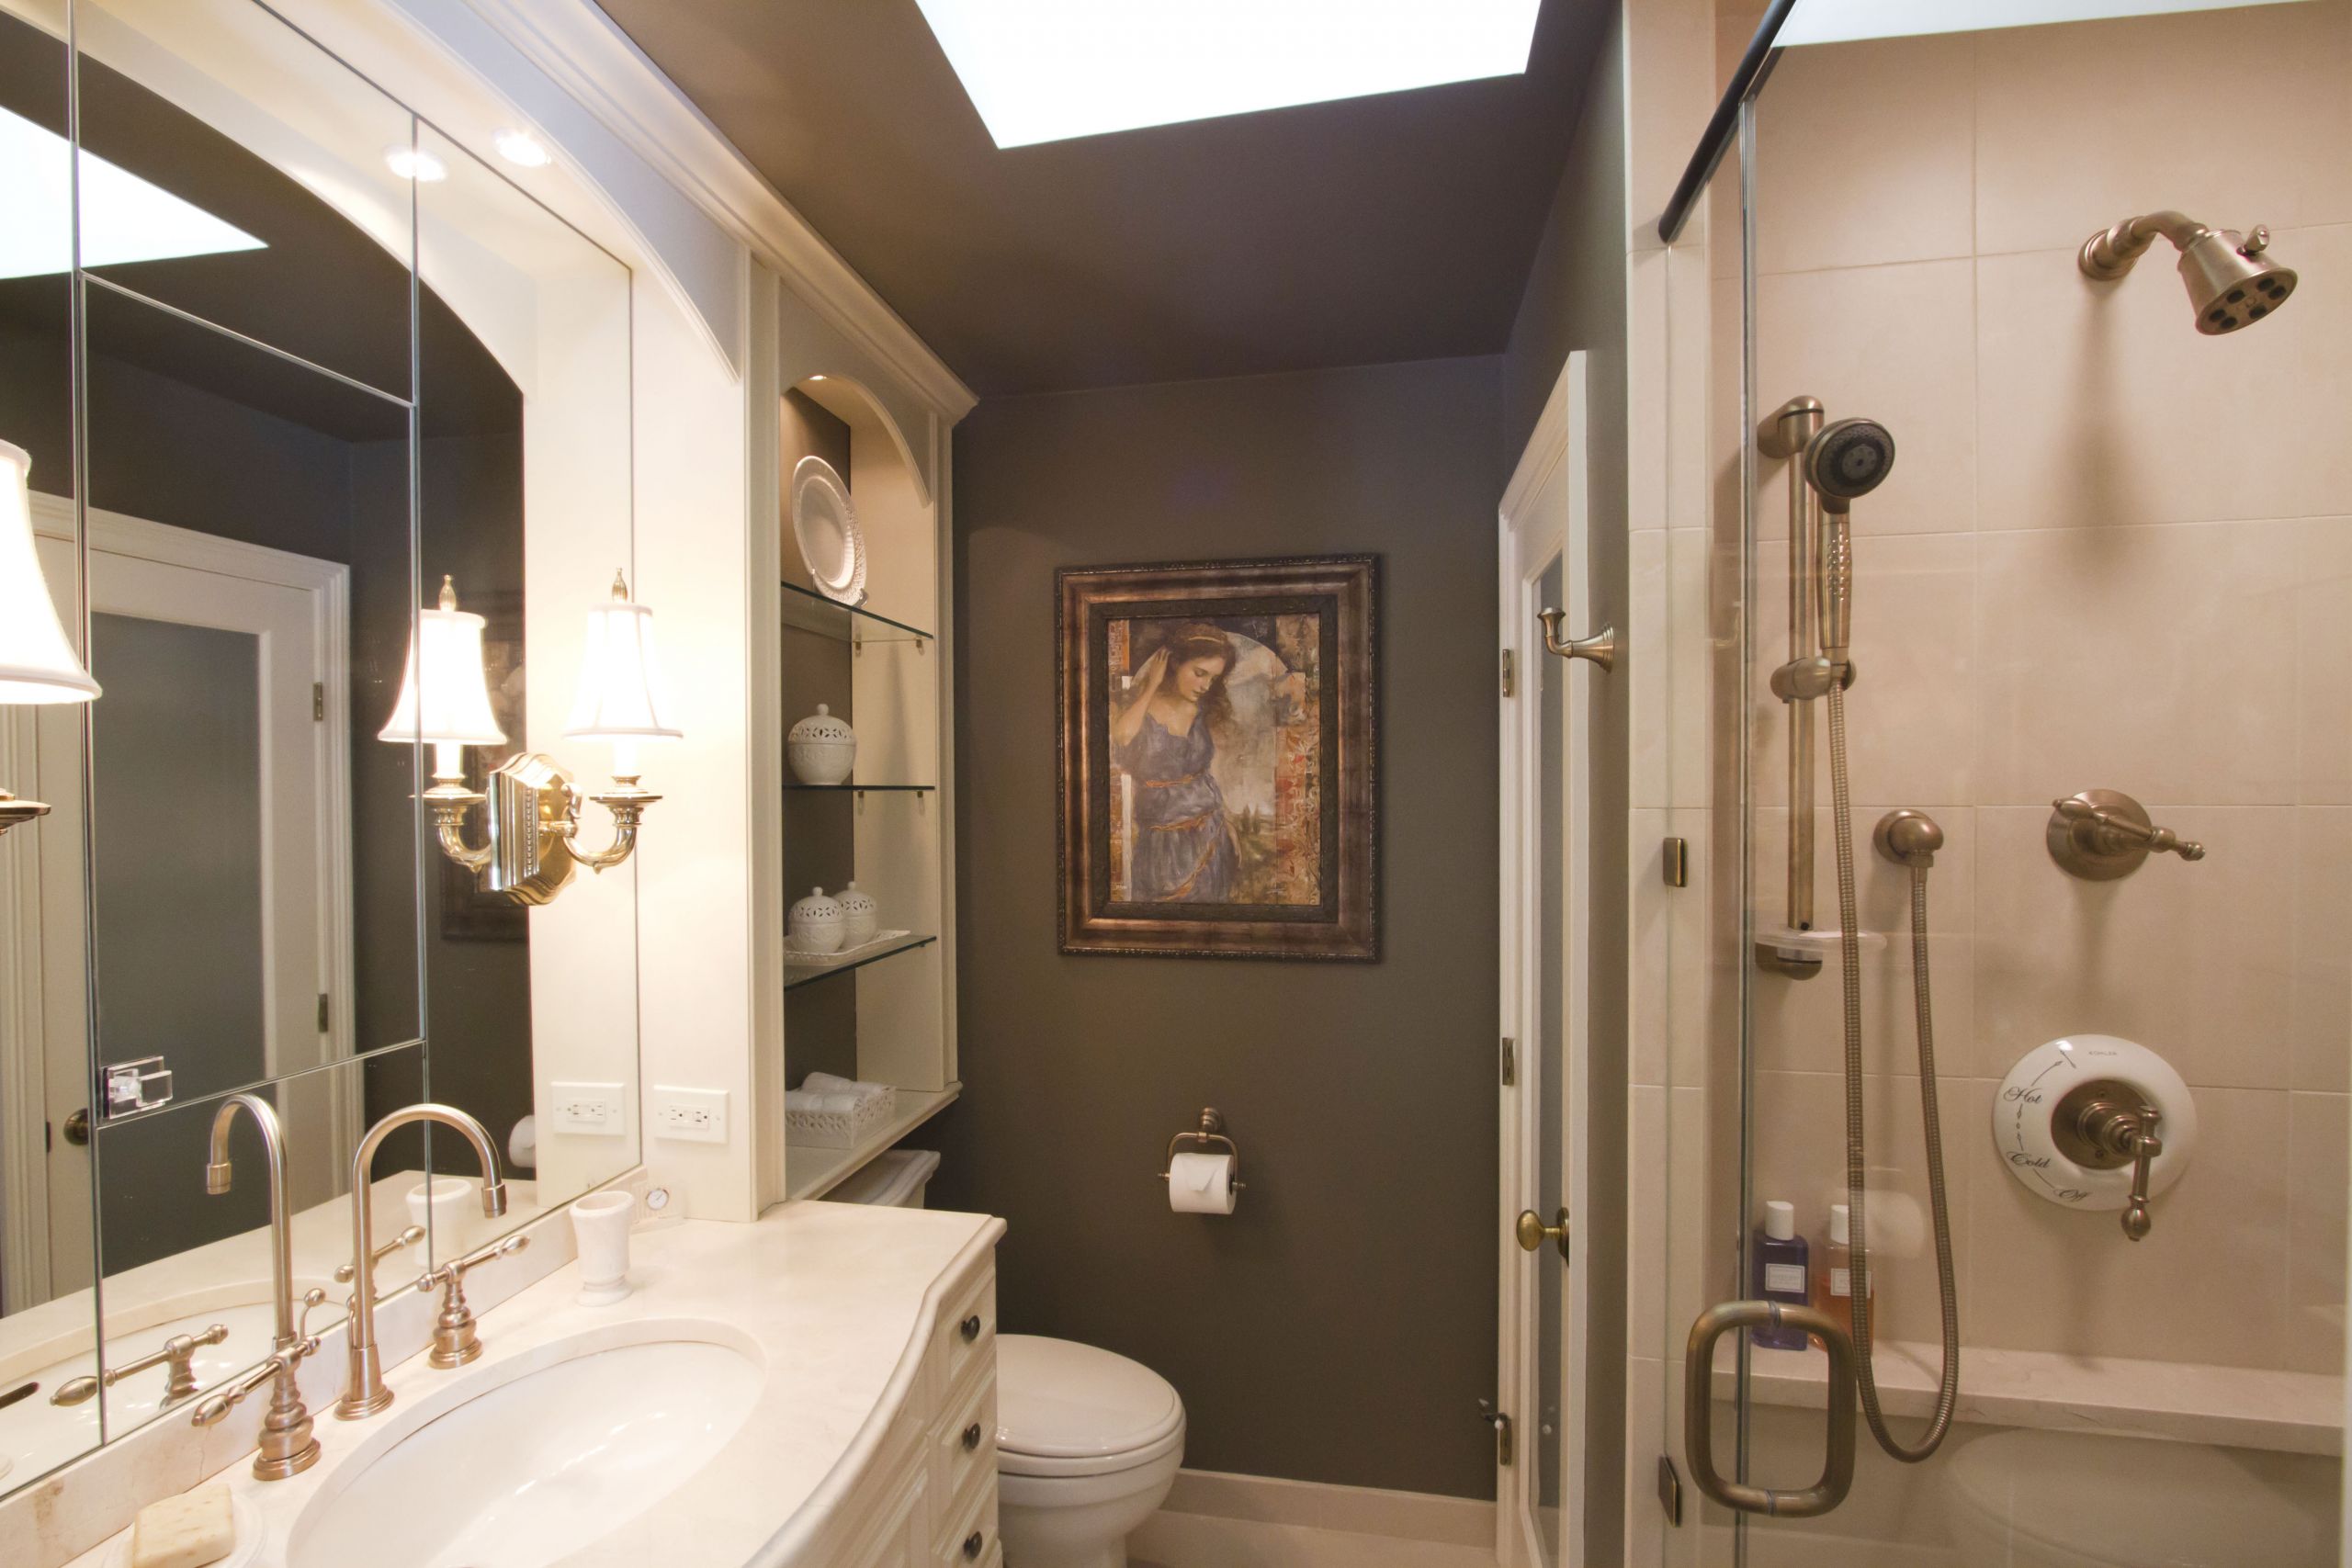 Master Bathroom Plans
 home design small bathroom ideas